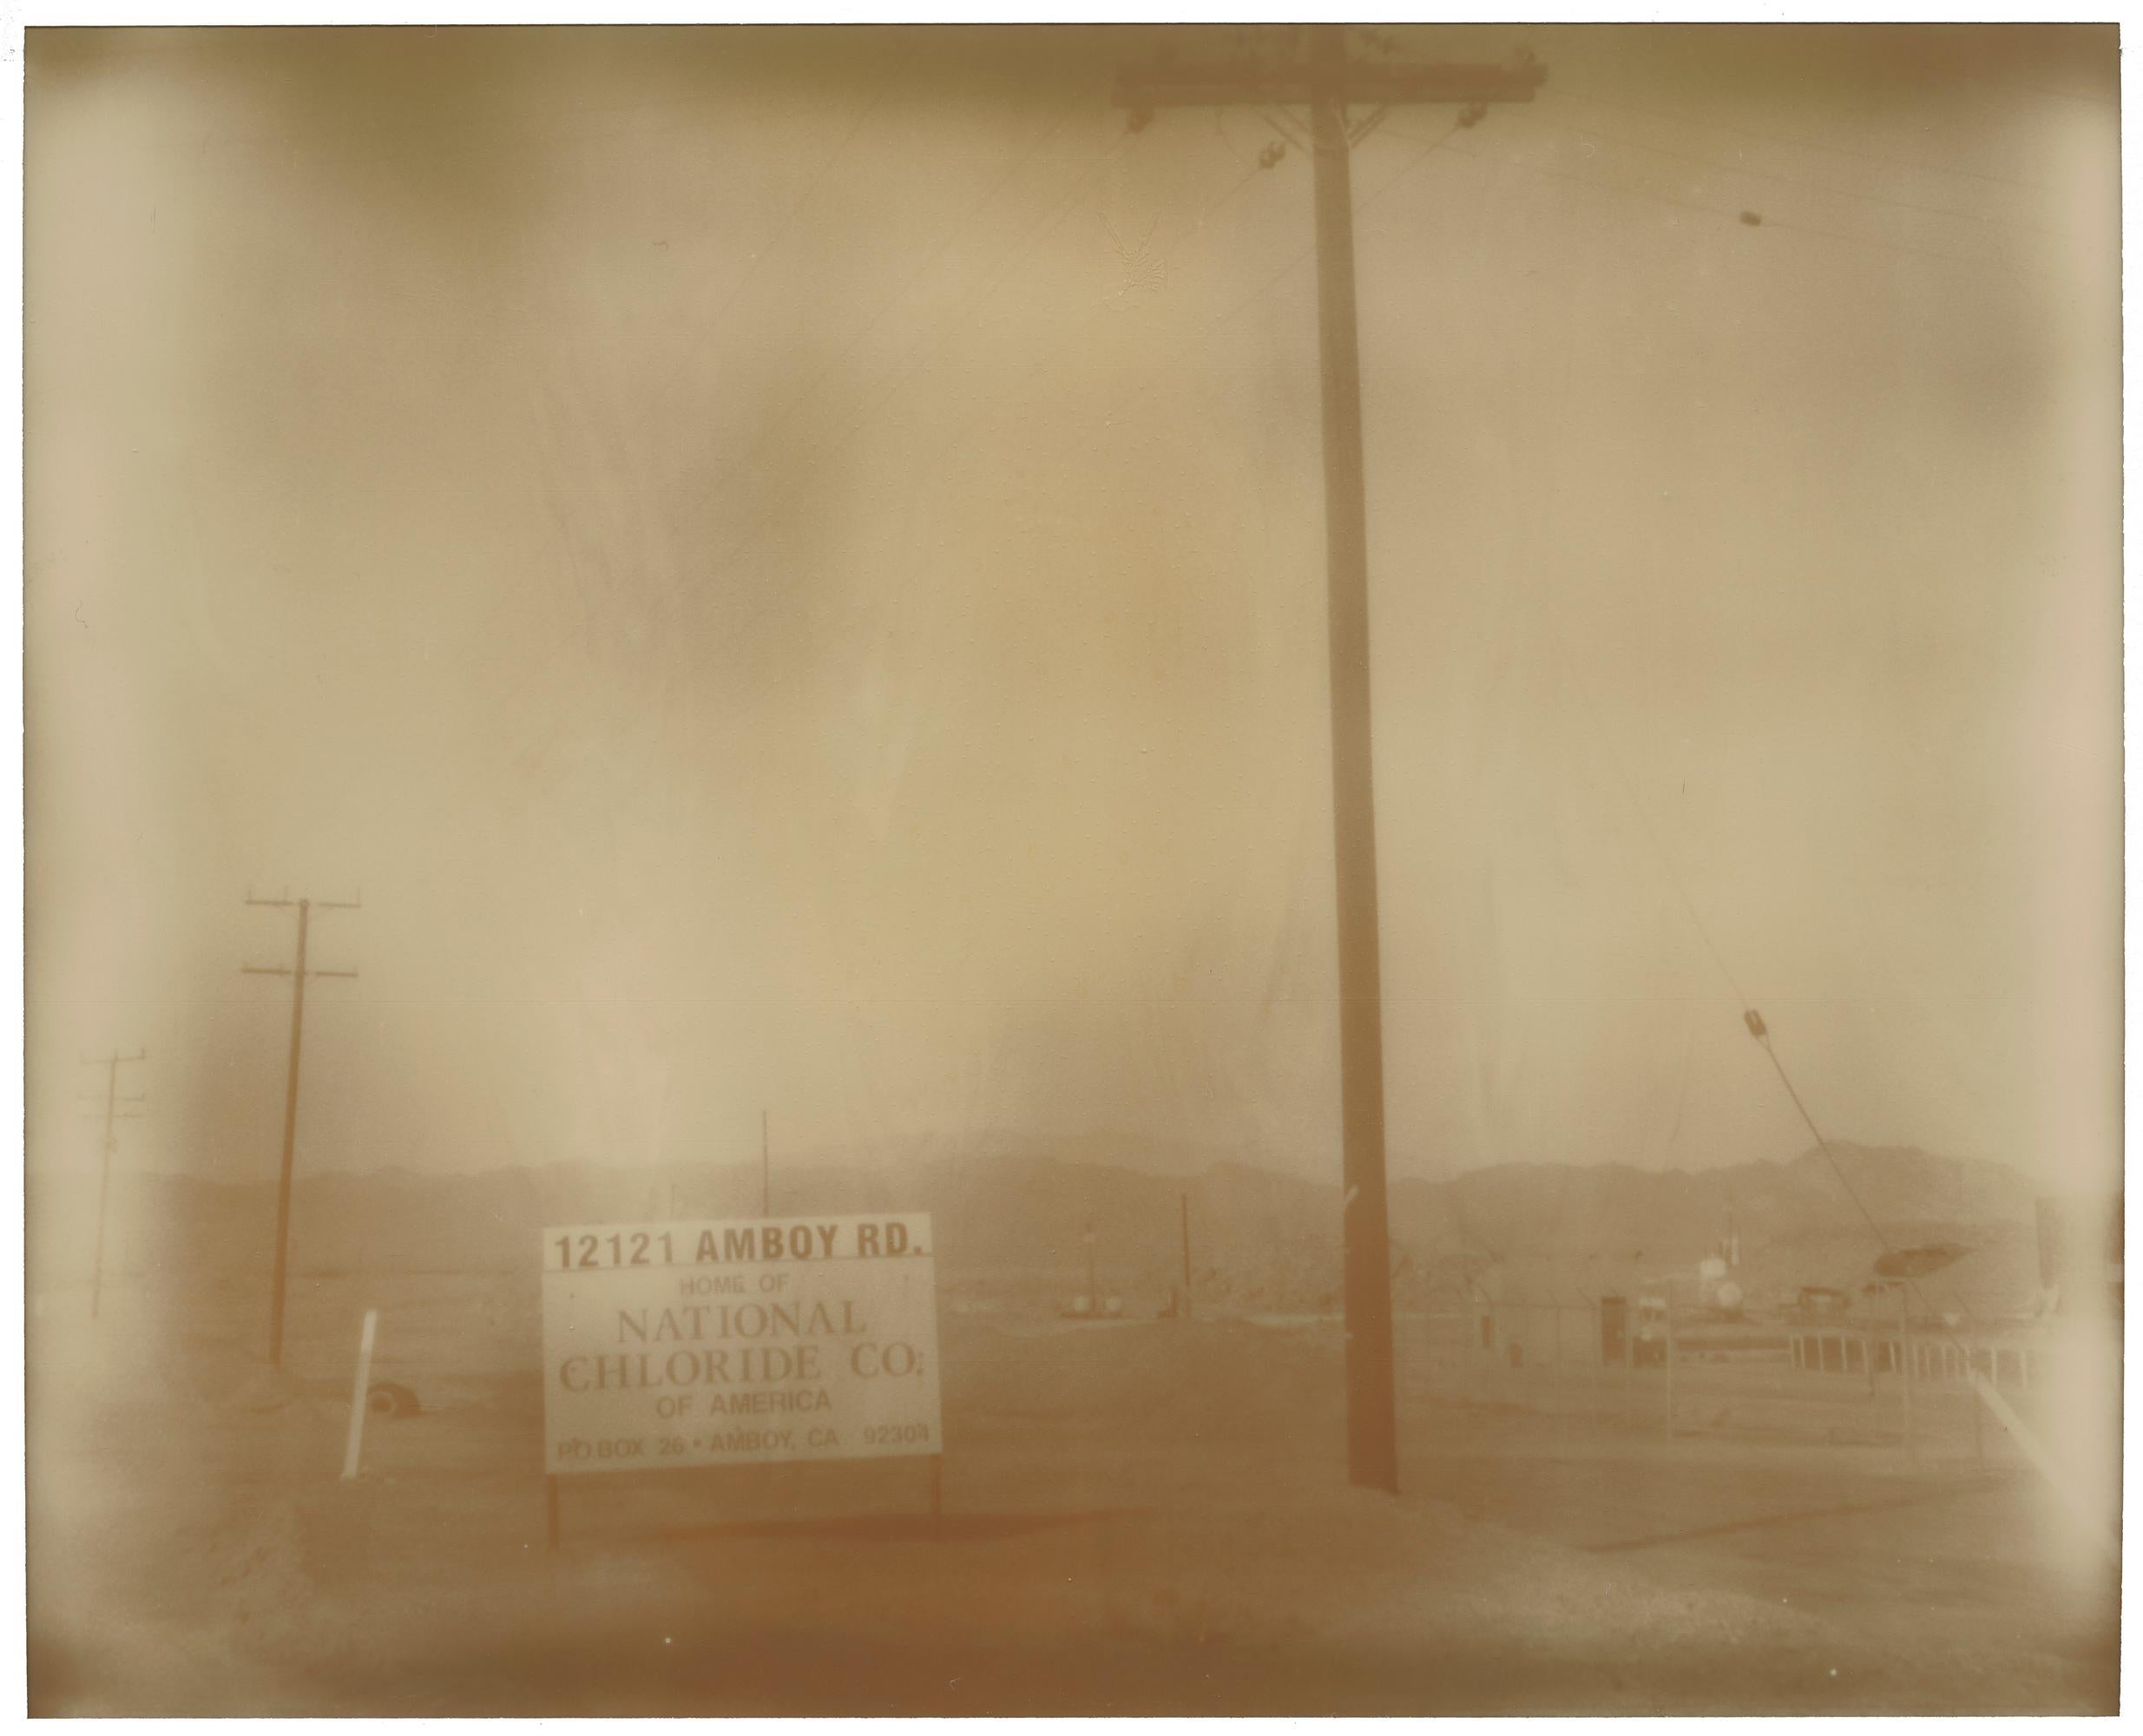 Stefanie Schneider Black and White Photograph - 12121 Amboy Road (California Badlands) - Contemporary, Polaroid, Landscape